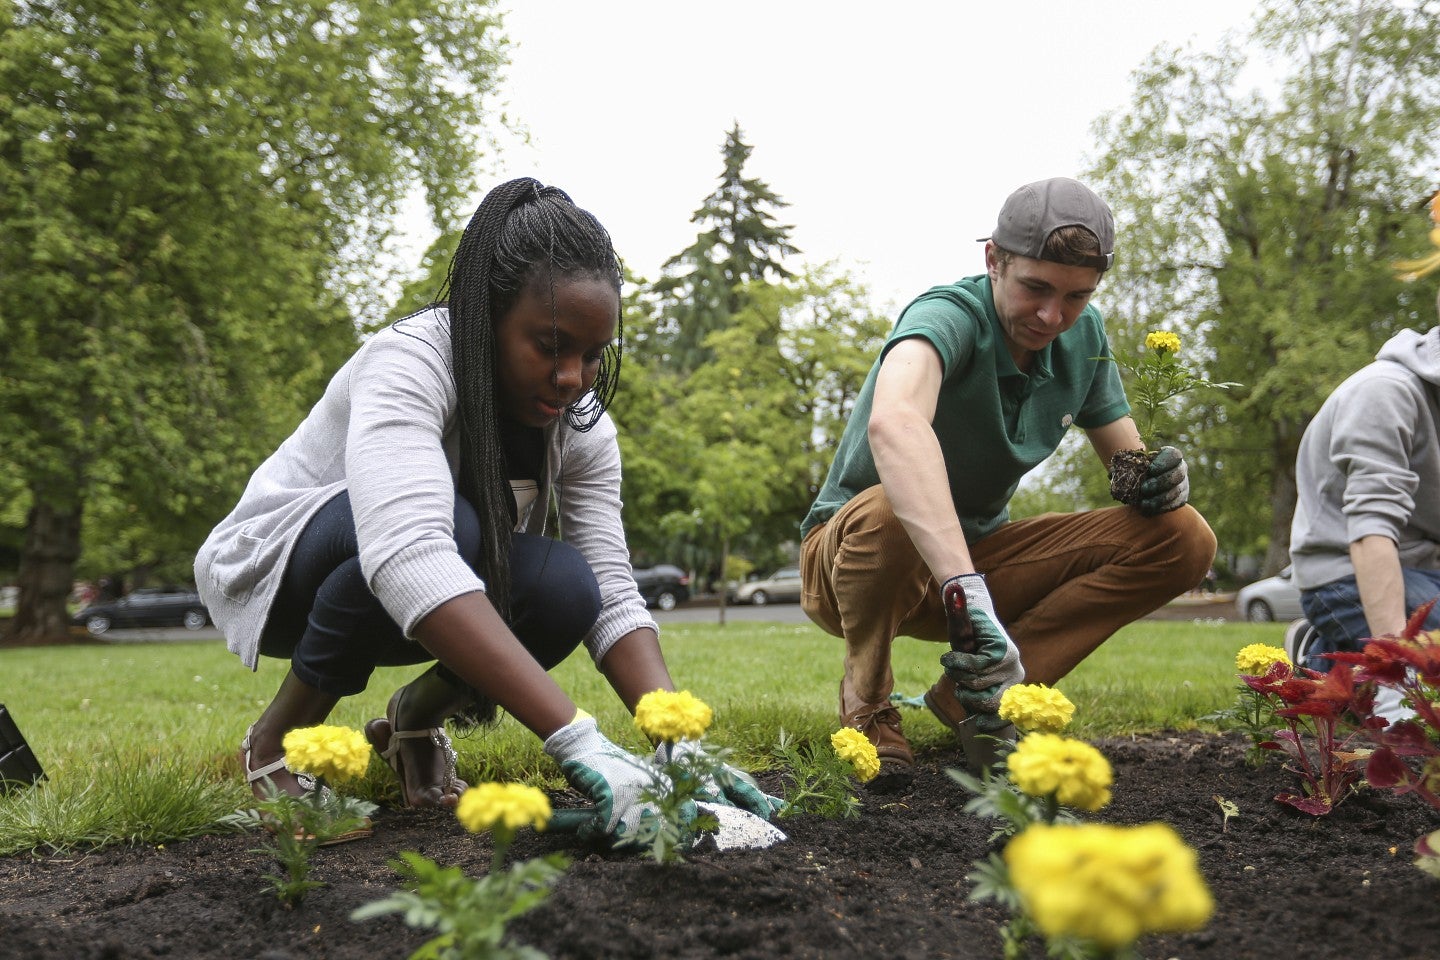 University of Oregon students Natalia Nahr and Matt Carroll work to plant flowers on University Day on Thursday, May 21, 2015, on the University of Oregon campus in Eugene, Oregon.